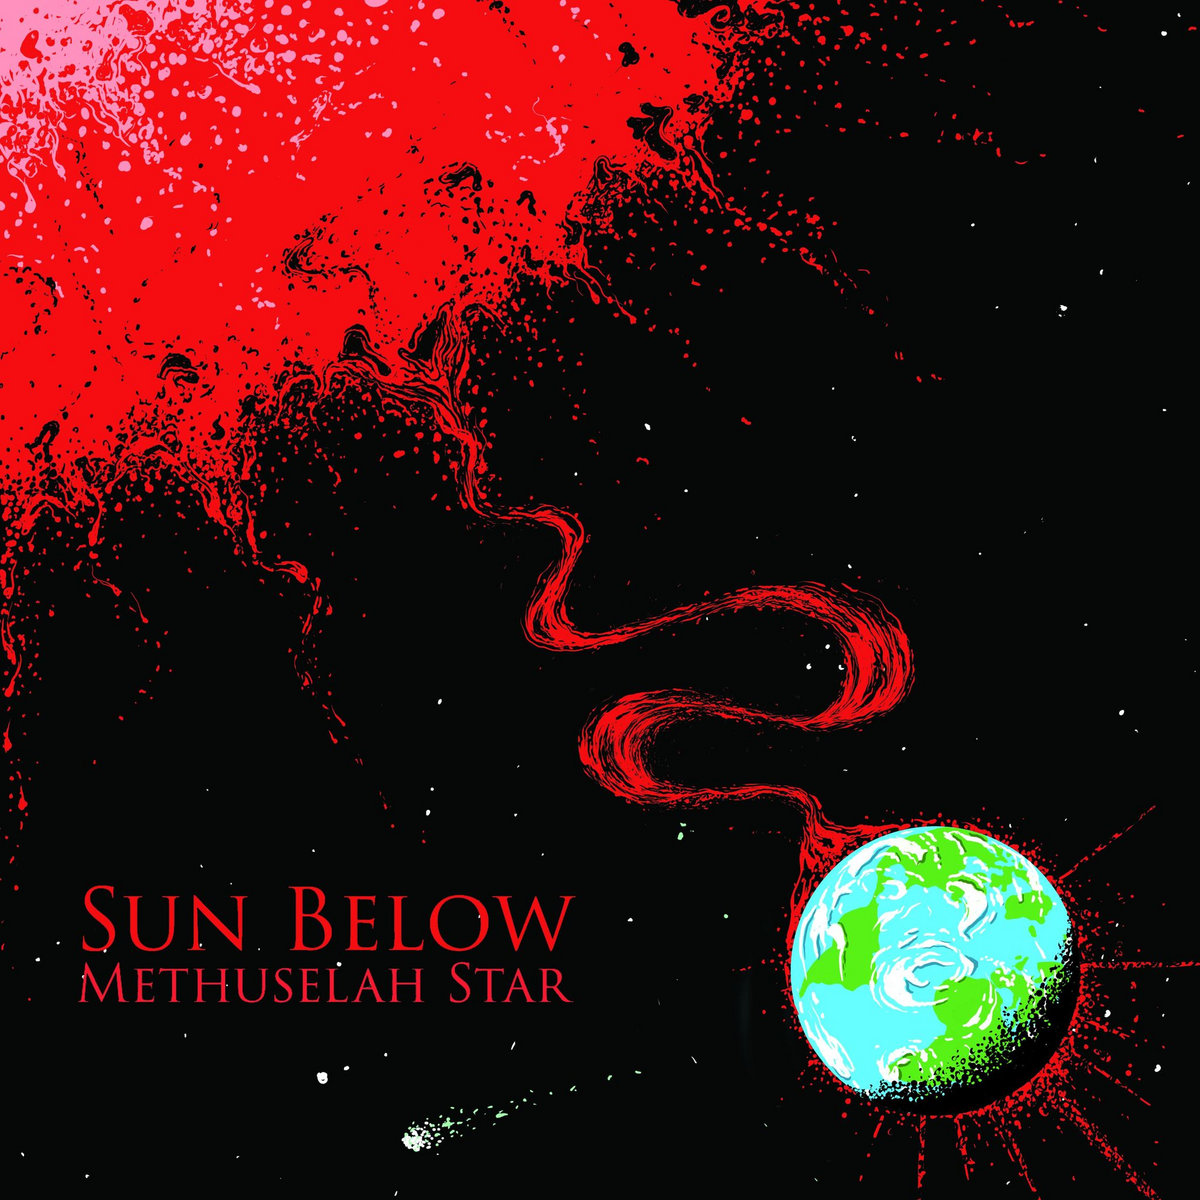 LISTEN: “Methuselah Star” by Sun Below